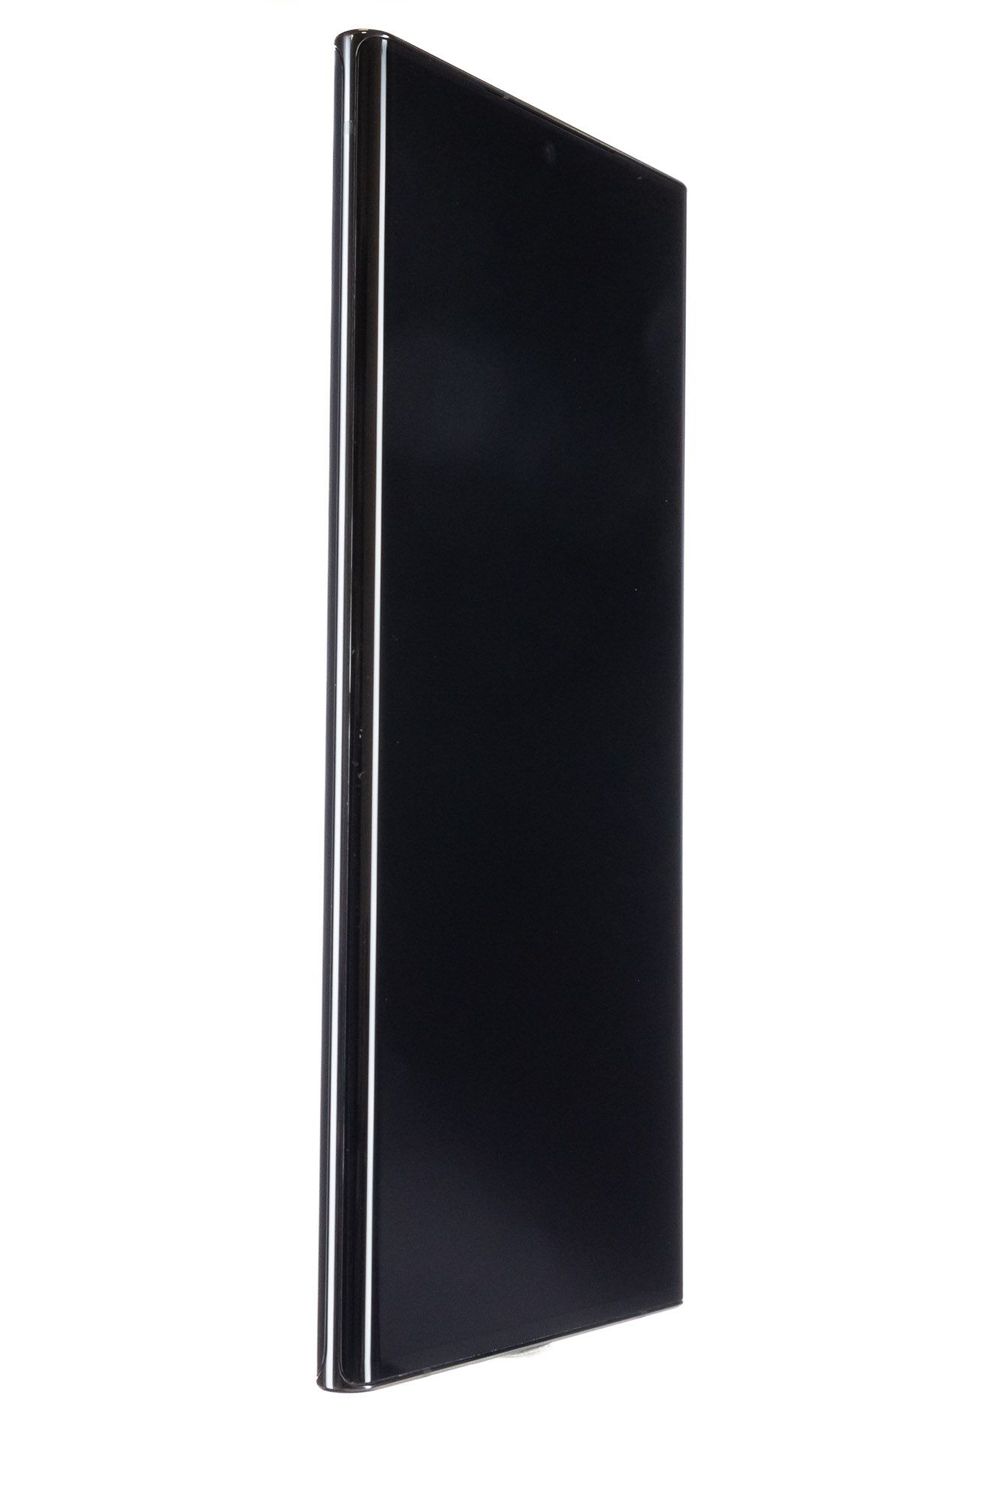 Mobiltelefon Samsung Galaxy Note 20 Ultra 5G, Black, 128 GB, Bun